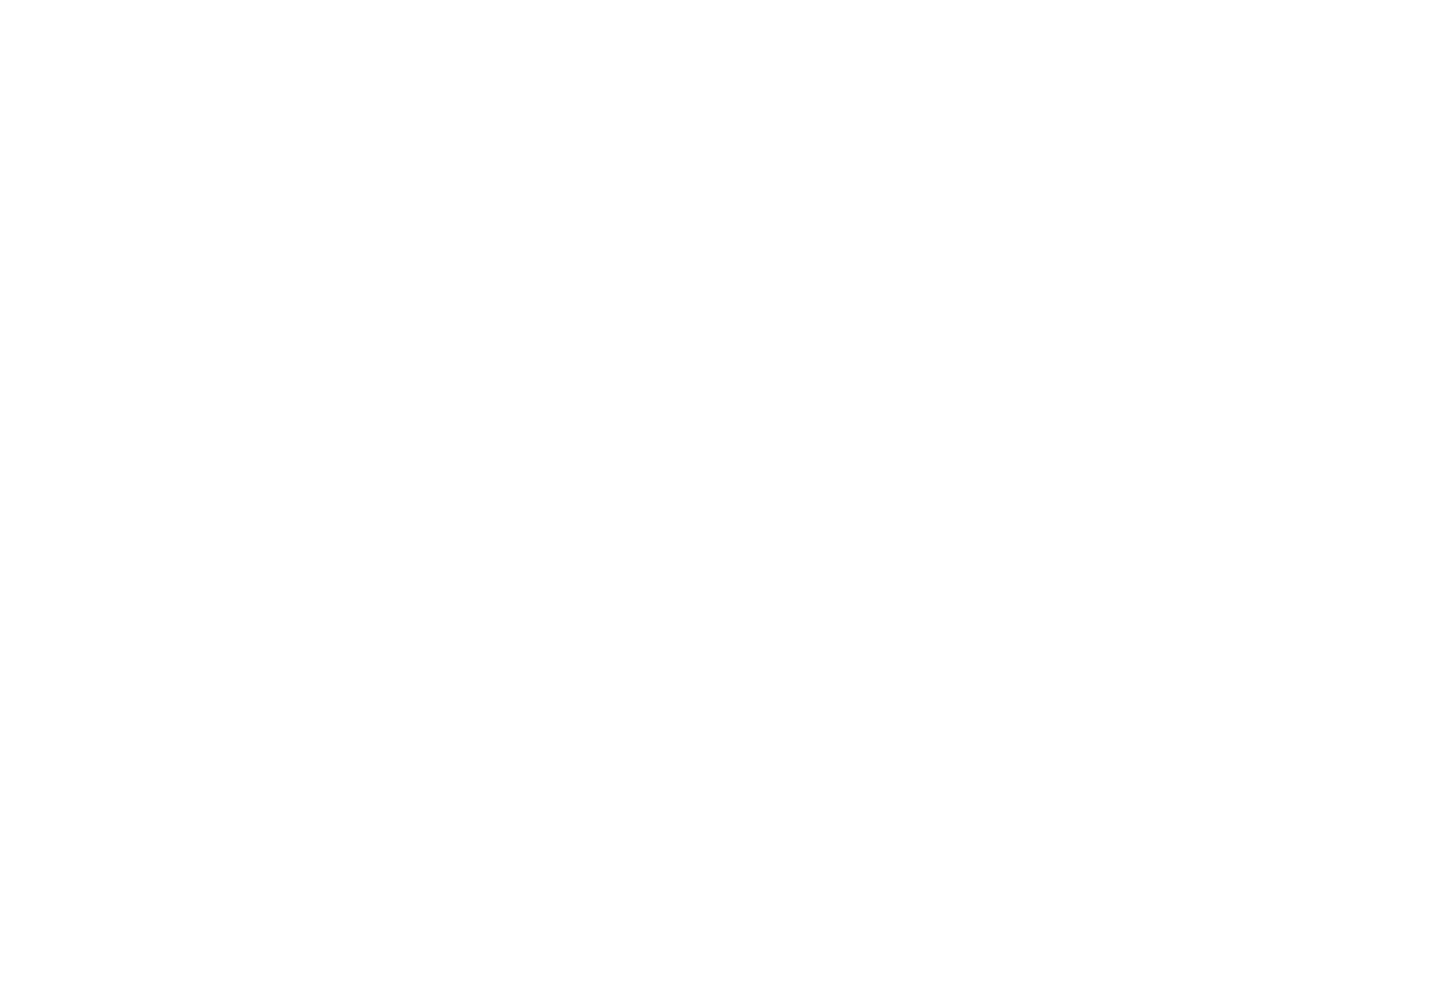 blake the artist